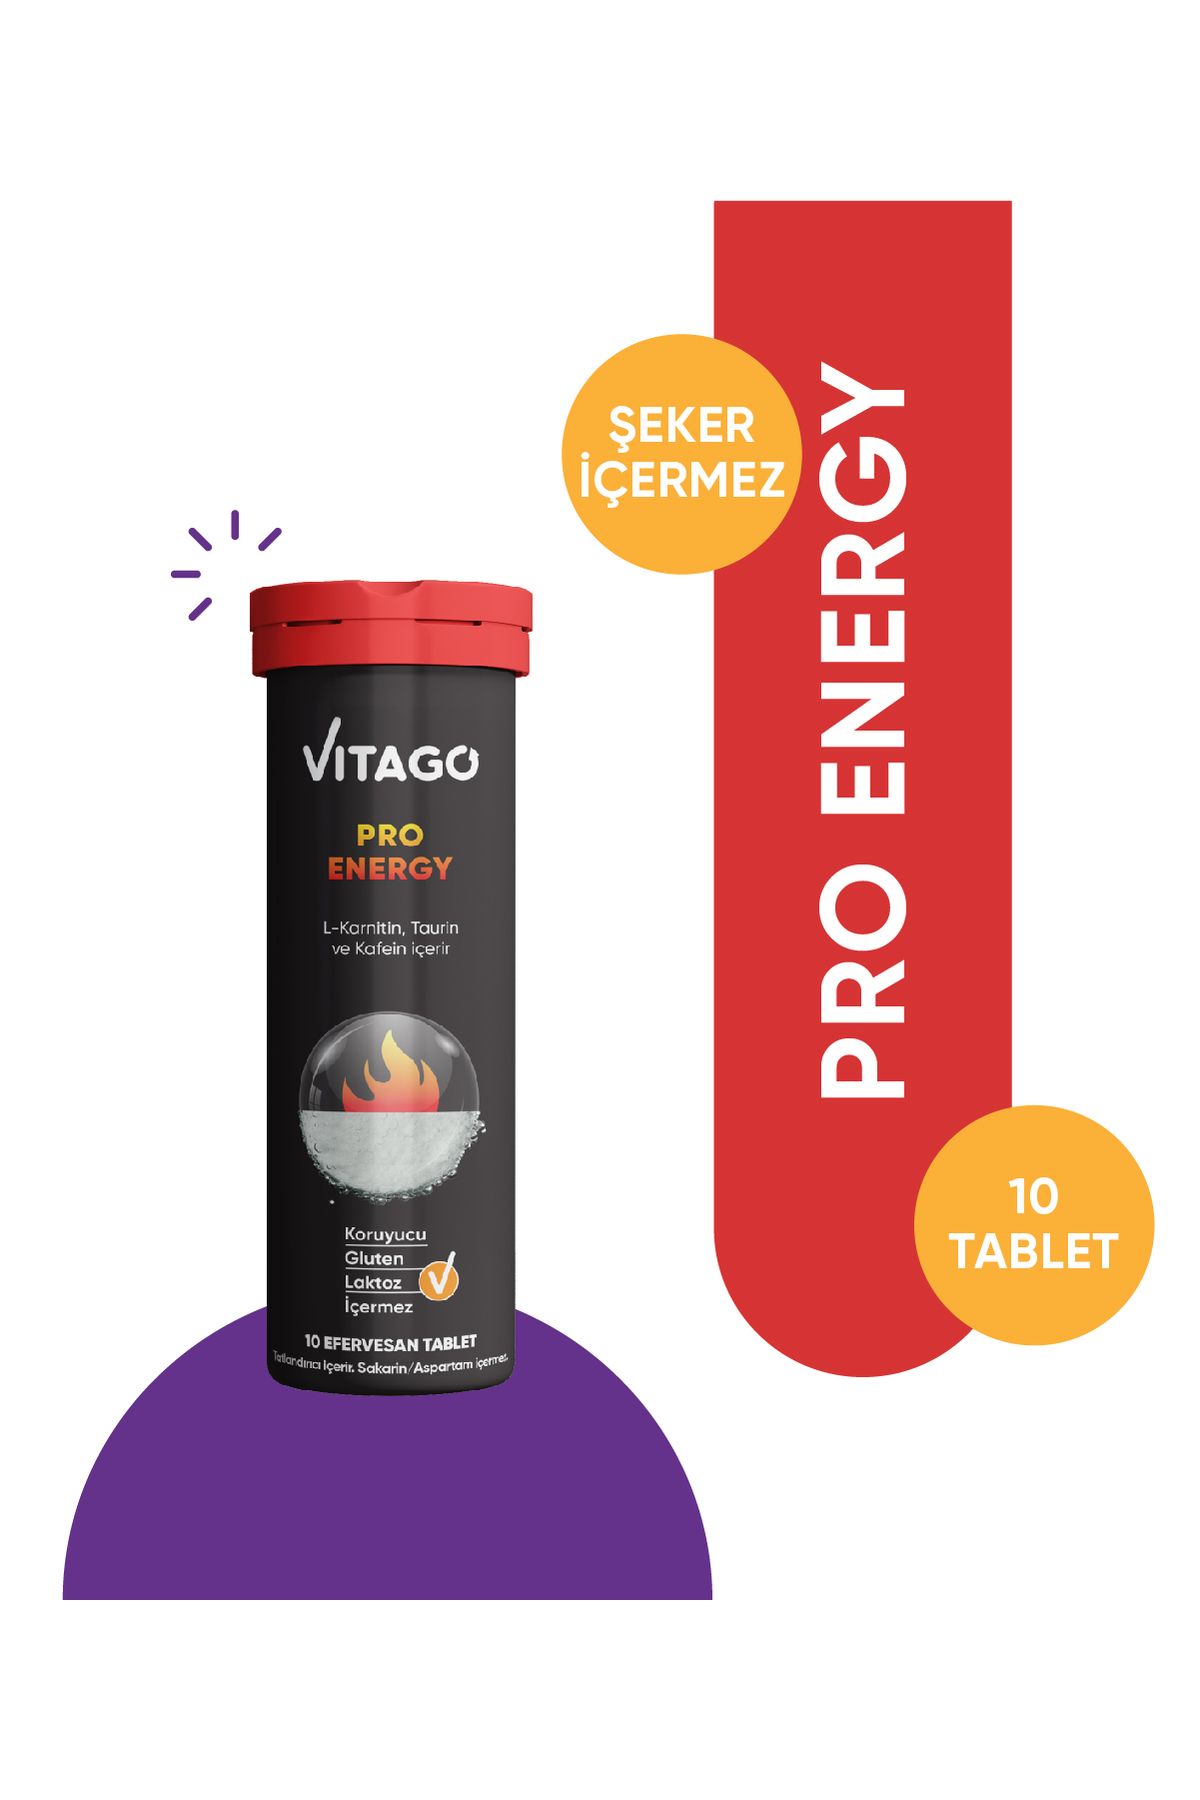 Vitago Energy L-karnitin, Taurin, Kafein Içeren 10 Efervesan Tablet